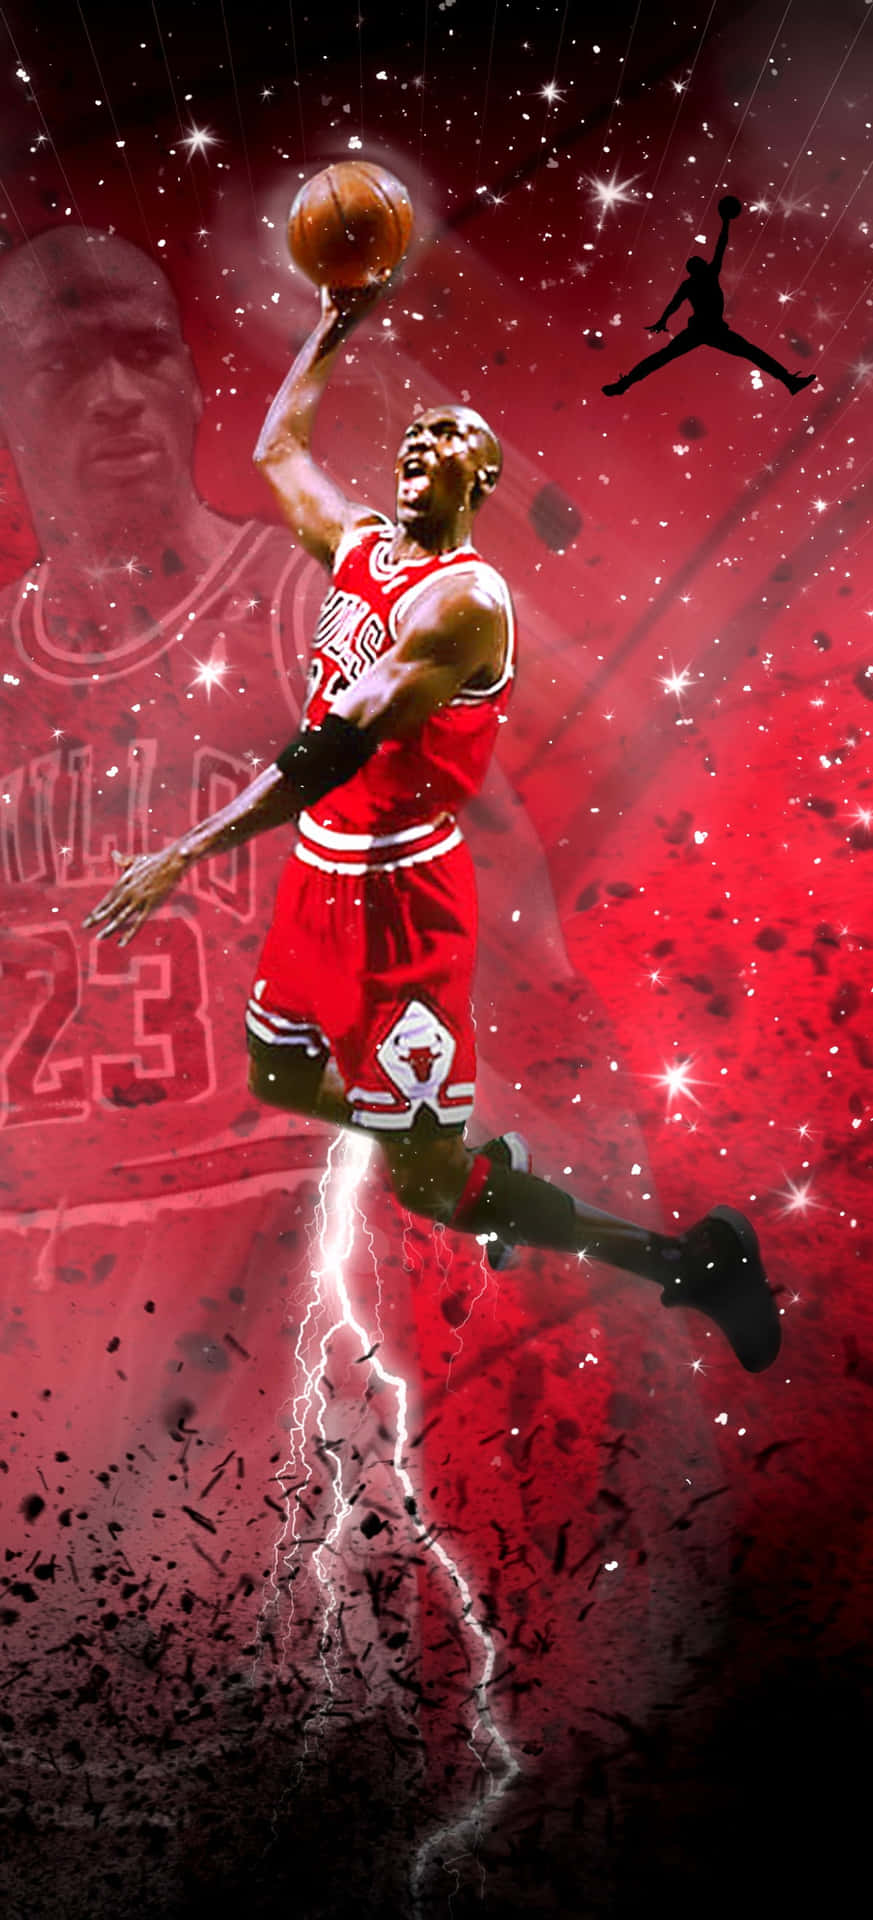 Michael Jordan rocker det seneste iPhone-cover. Wallpaper